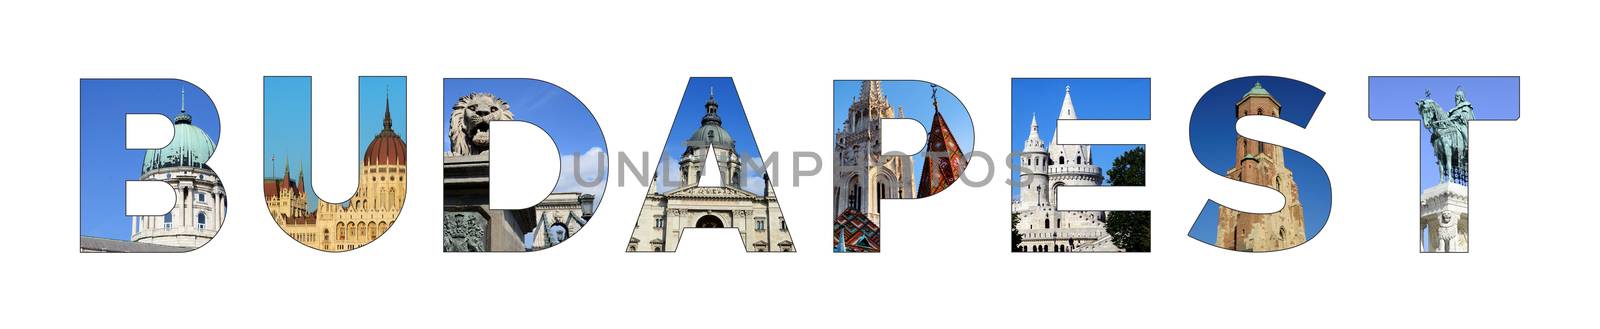 budapest city hungary landmarks images inside text